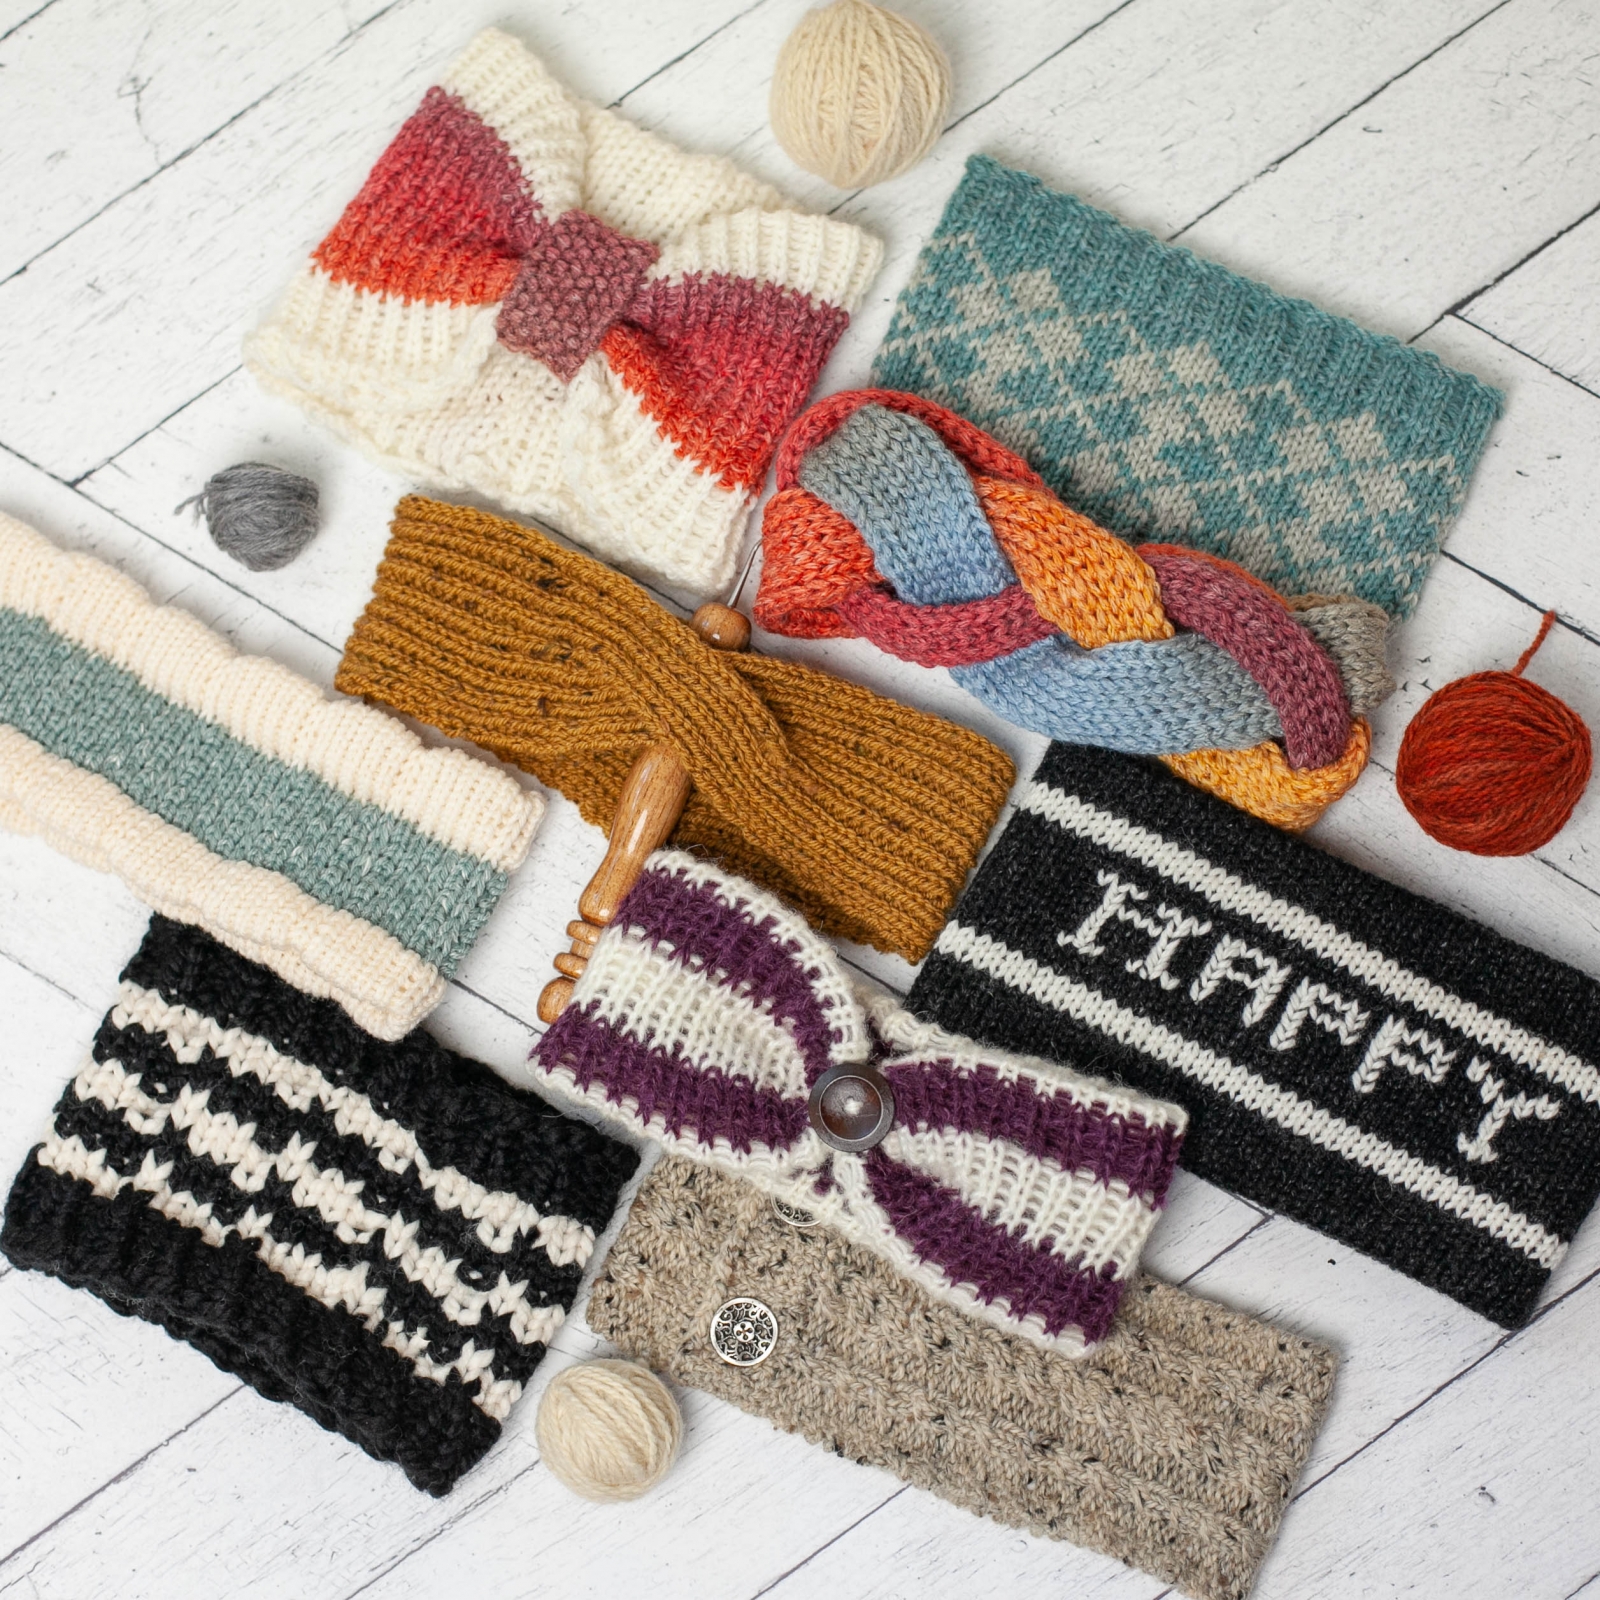 Loom Knit Headband Earwarmer Collection I 10 Patterns Included For Fair Isle Tuck Stitch Turban Sporty Extra Warm Head Warmers Pdf Pattern